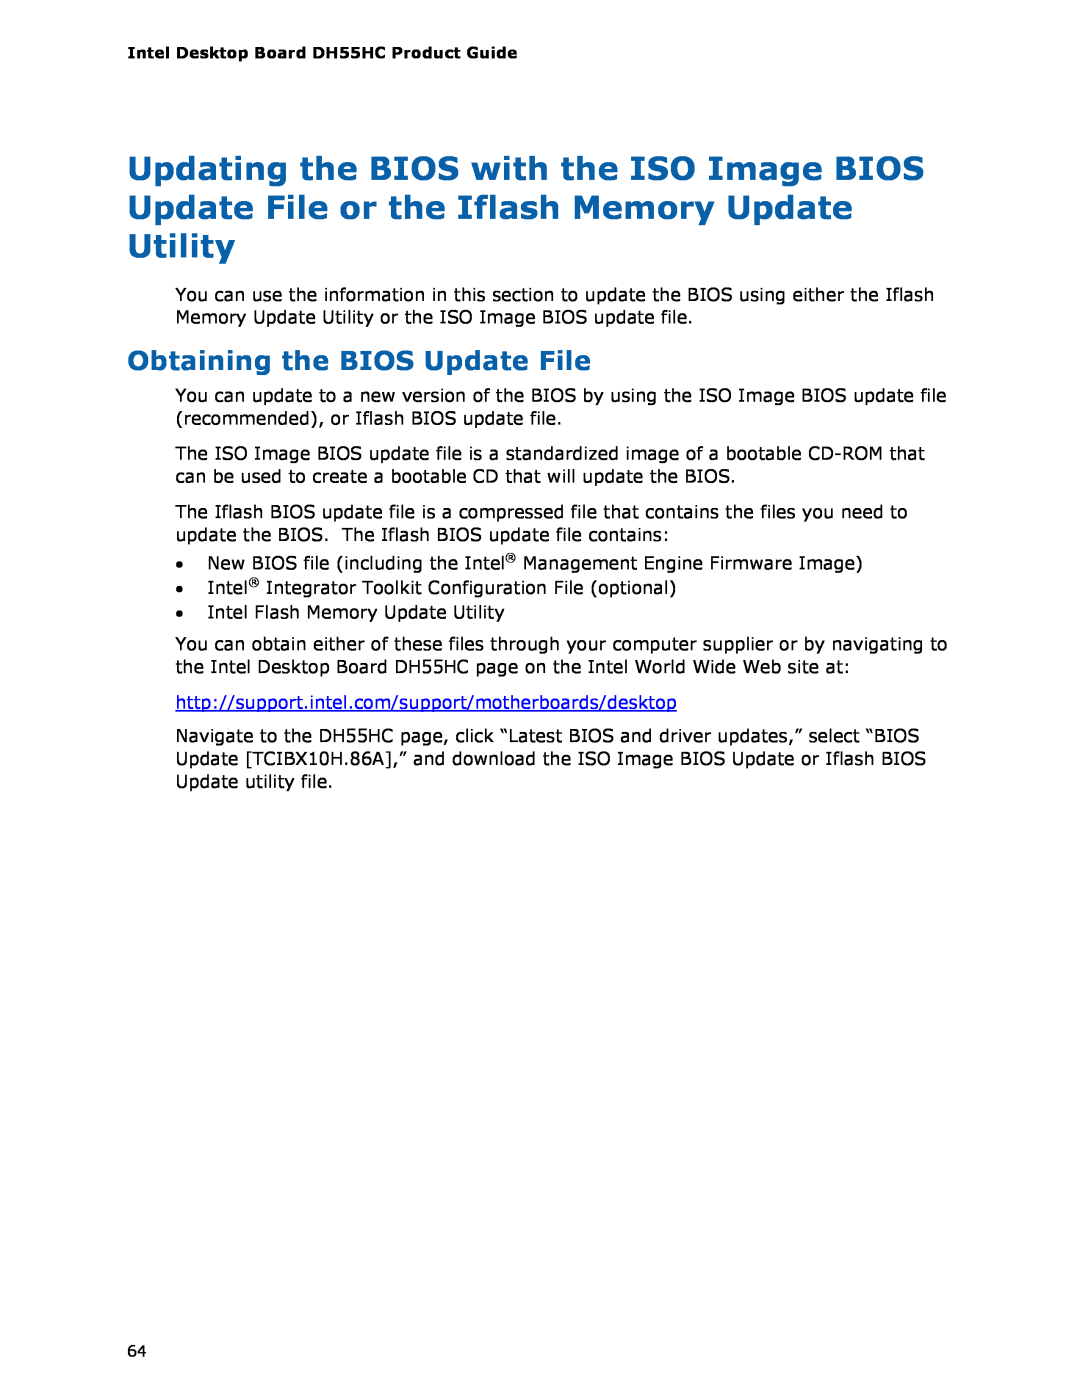 Intel BOXDH55HC manual Obtaining the BIOS Update File 